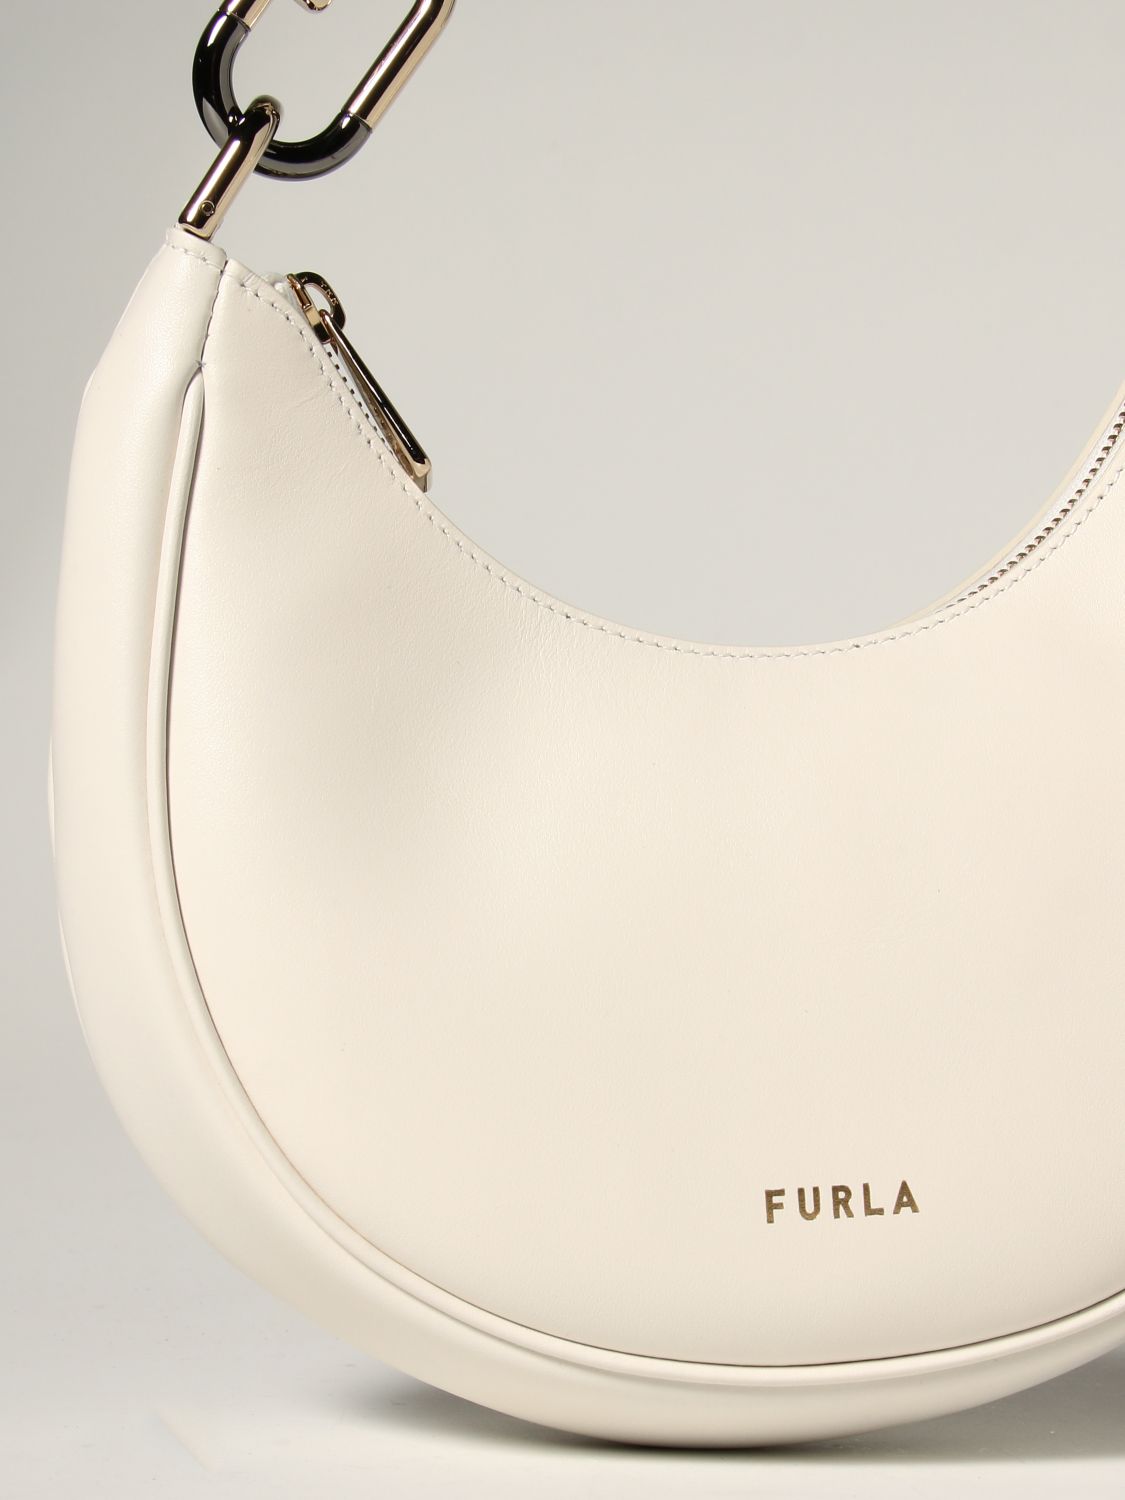 FURLA: Spring hobo bag in leather - Yellow  Furla shoulder bag  WB00475AX0733 online at